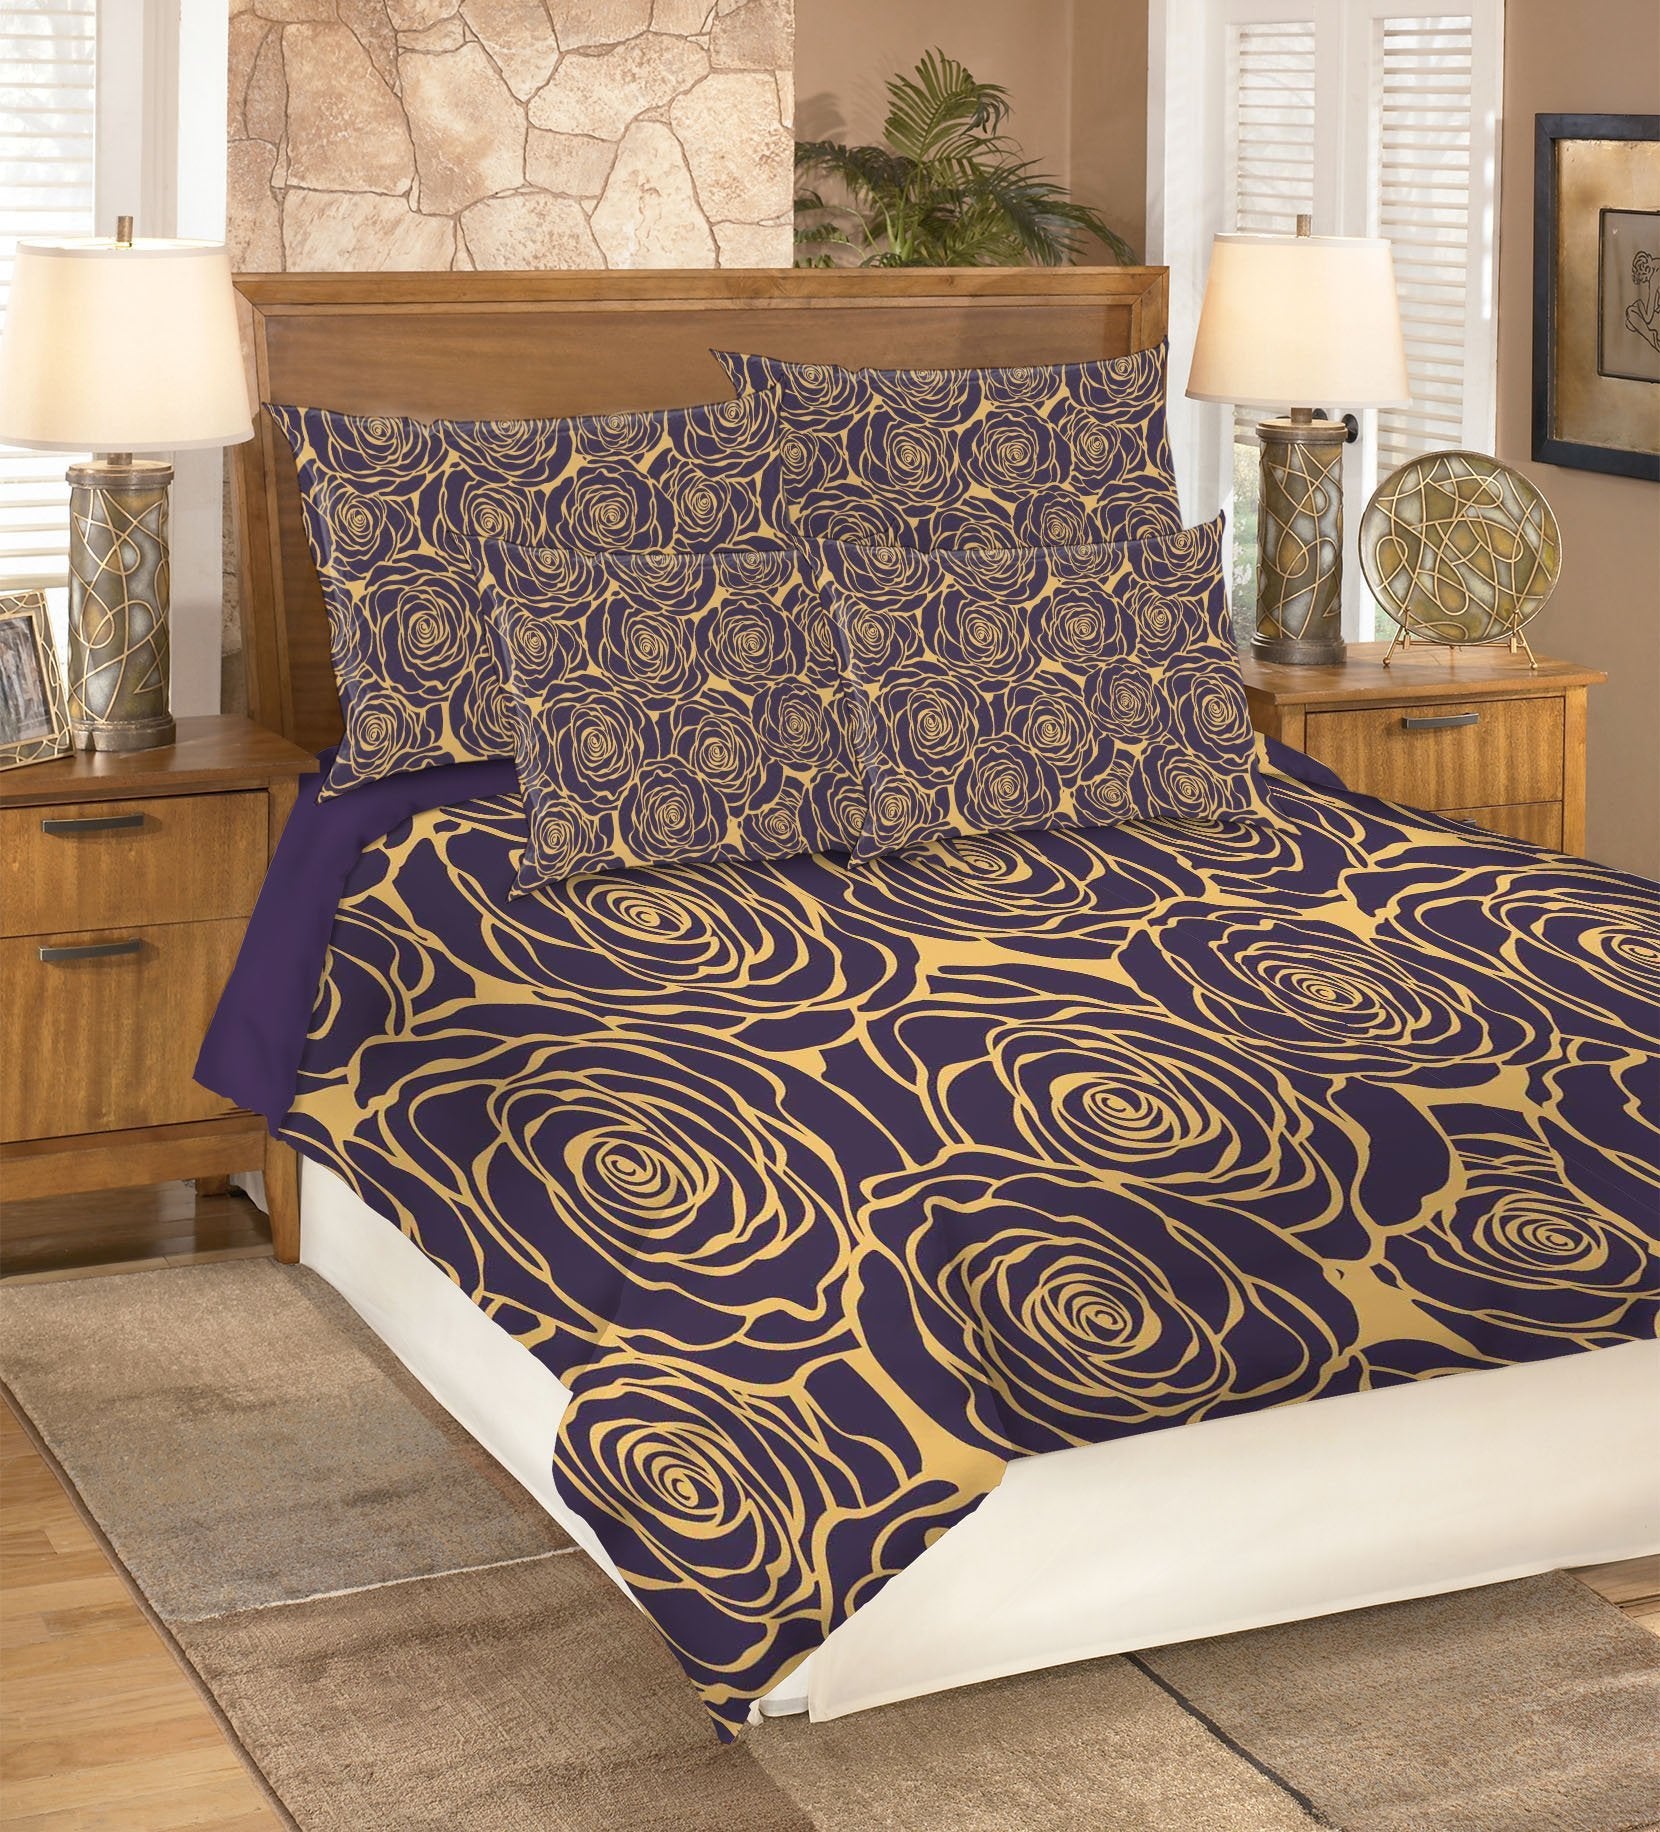 3D Roses Pattern 208 Bed Pillowcases Quilt Wallpaper AJ Wallpaper 